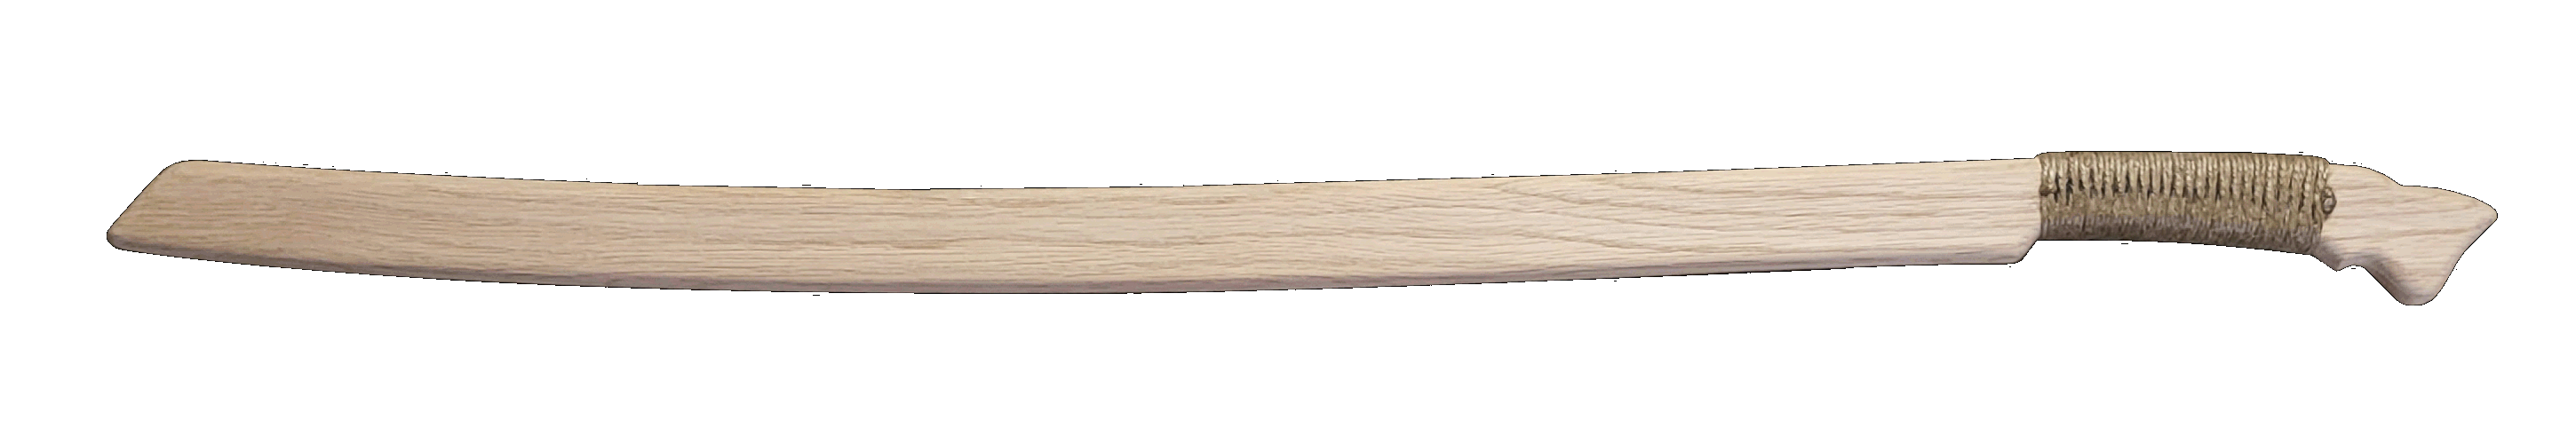 Long Blade